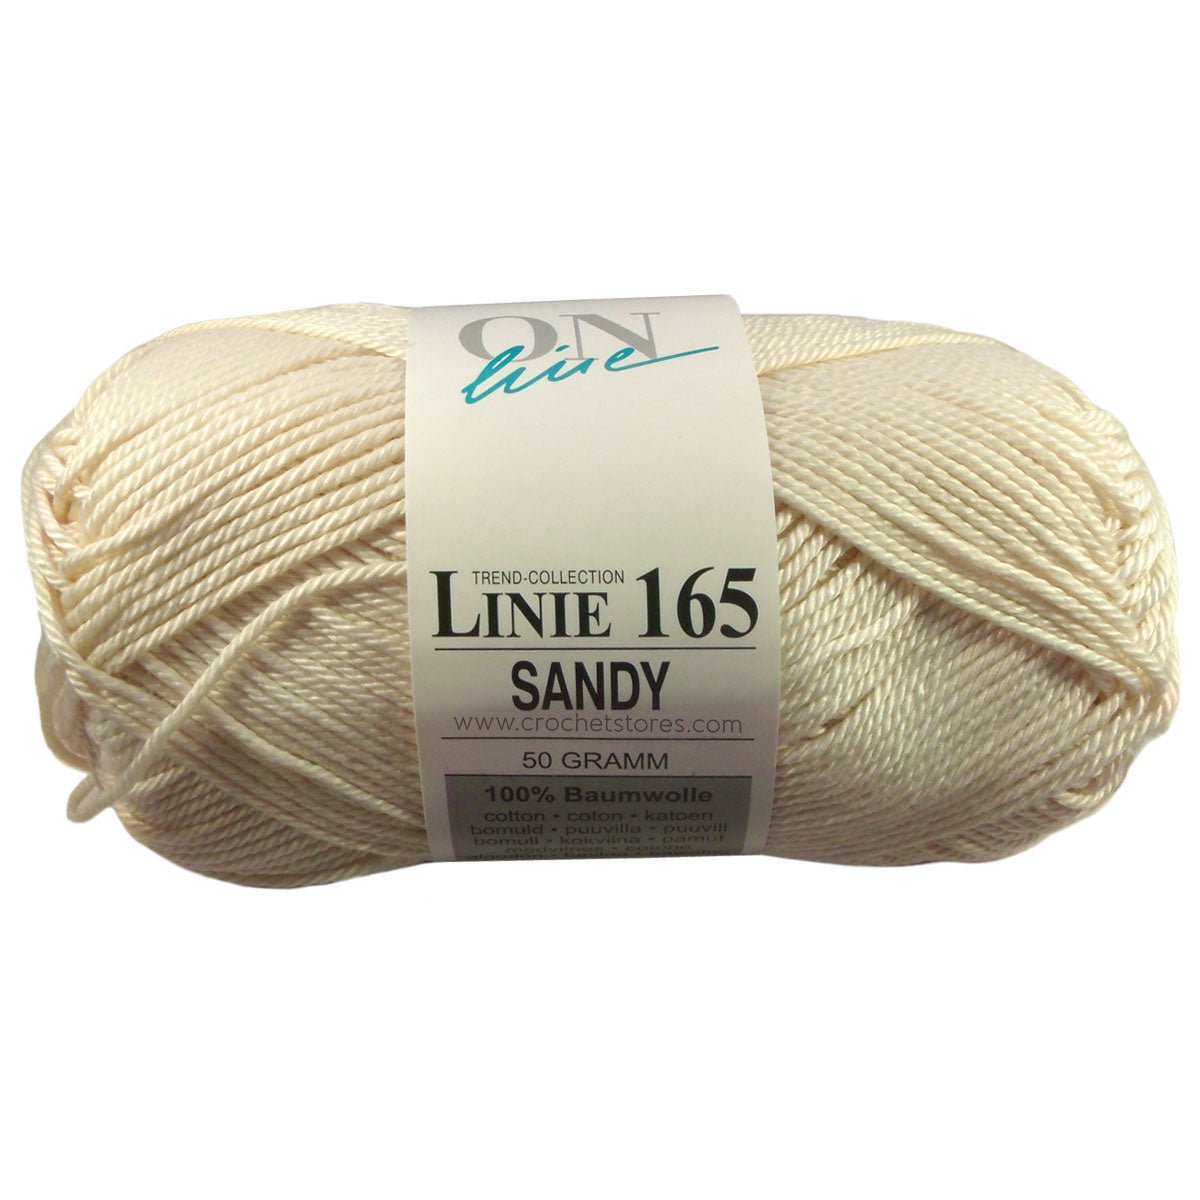 SANDY - Crochetstores110165-00044014366033332